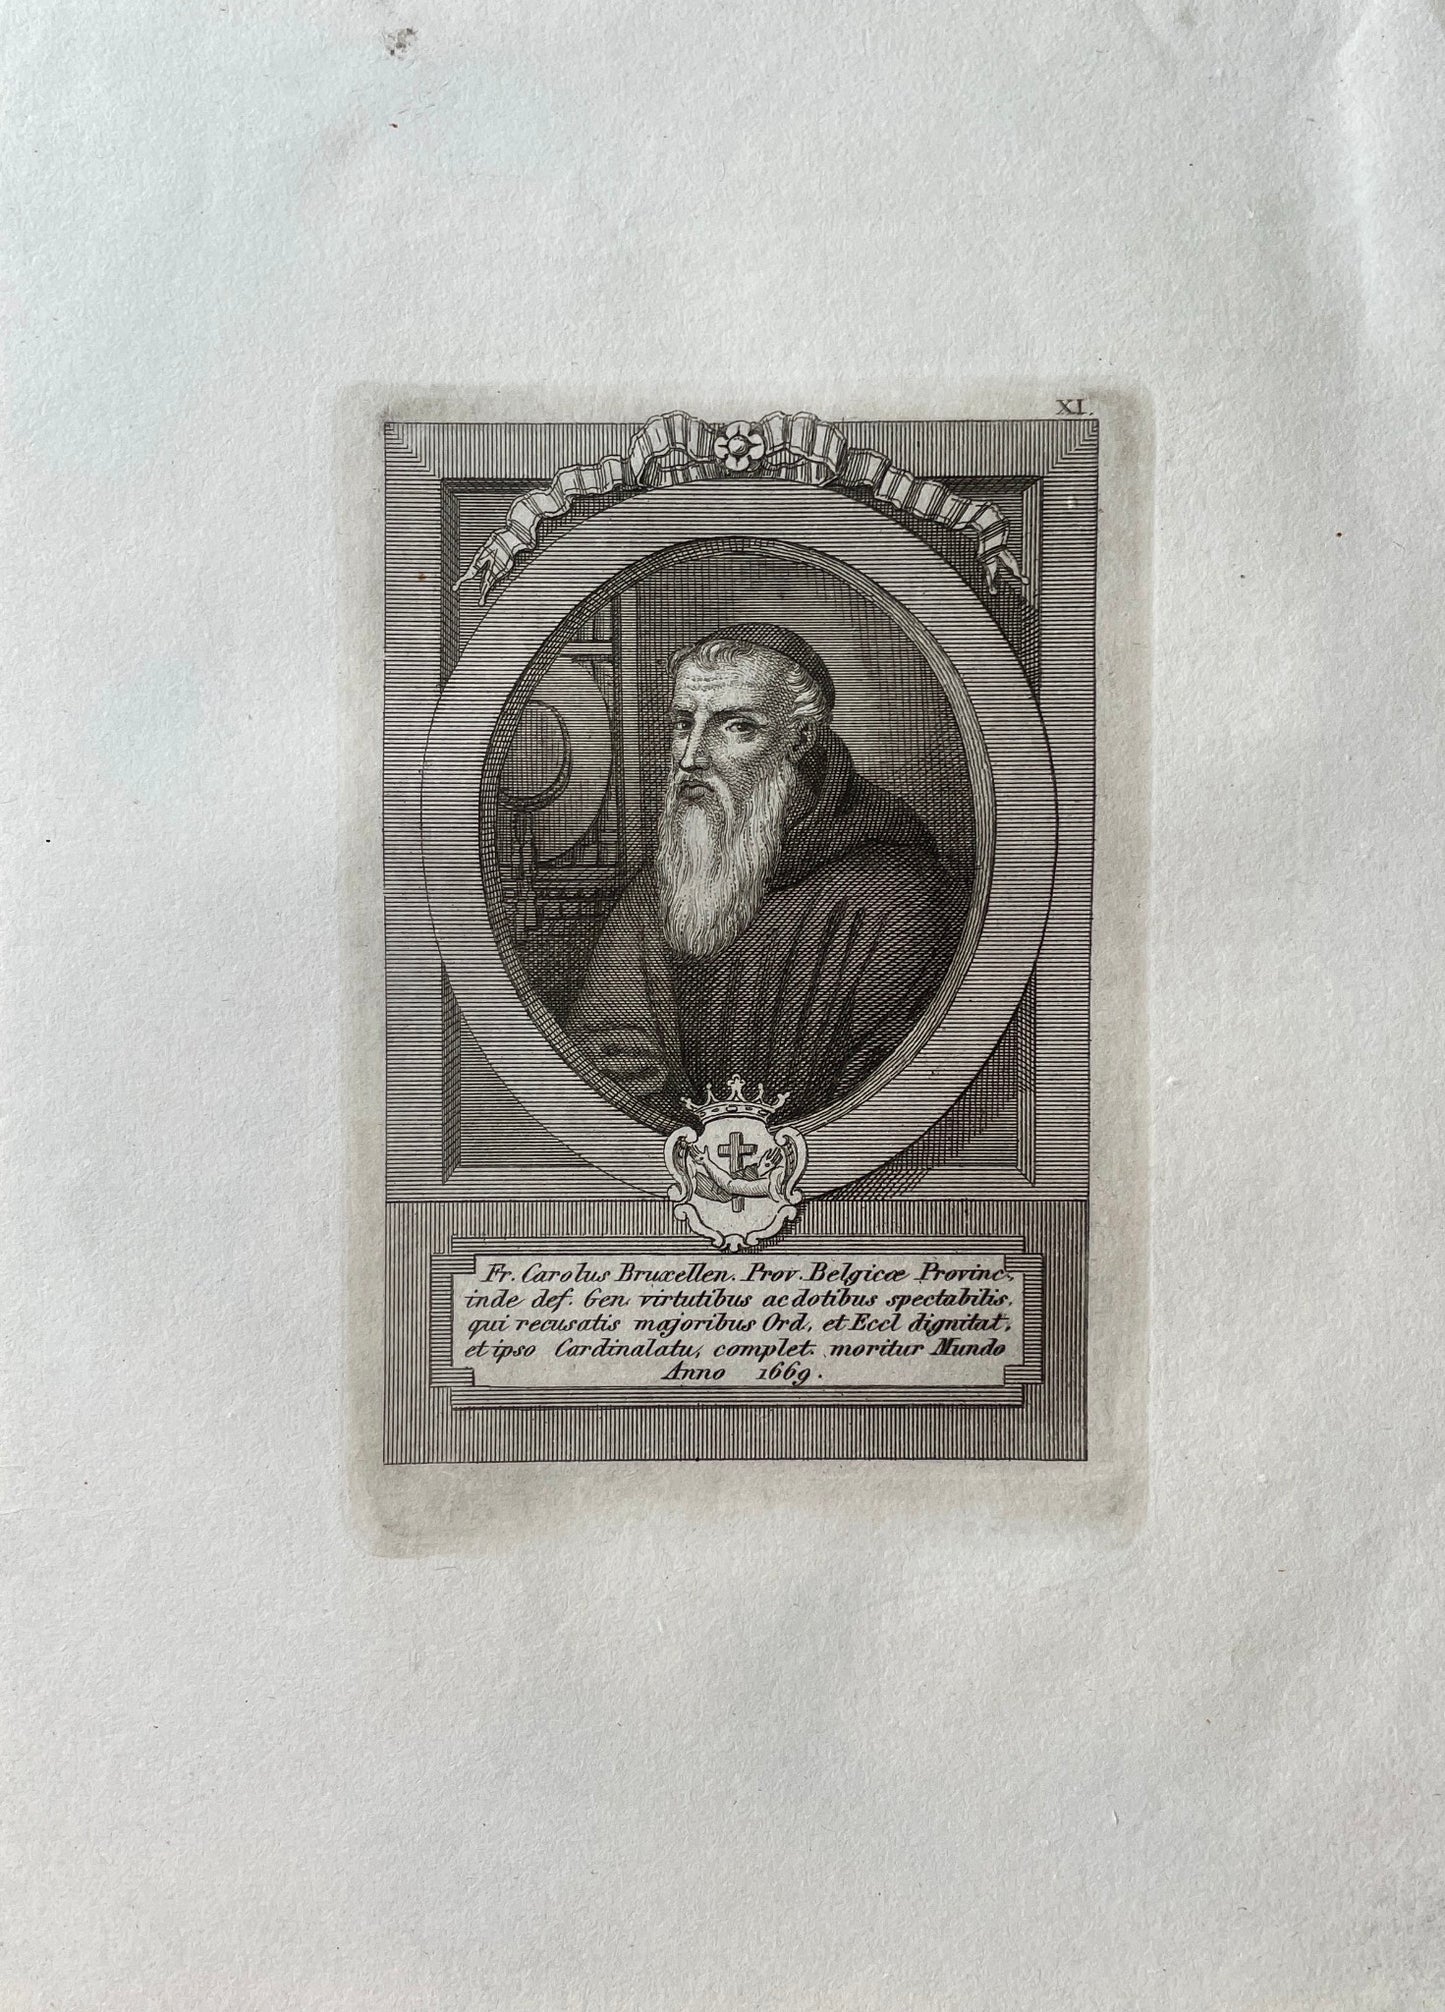 Antique Print - Church Dignitary - Luigi Cunego - Fr. Carolus Bruxellen - Dahlströms Fine Art